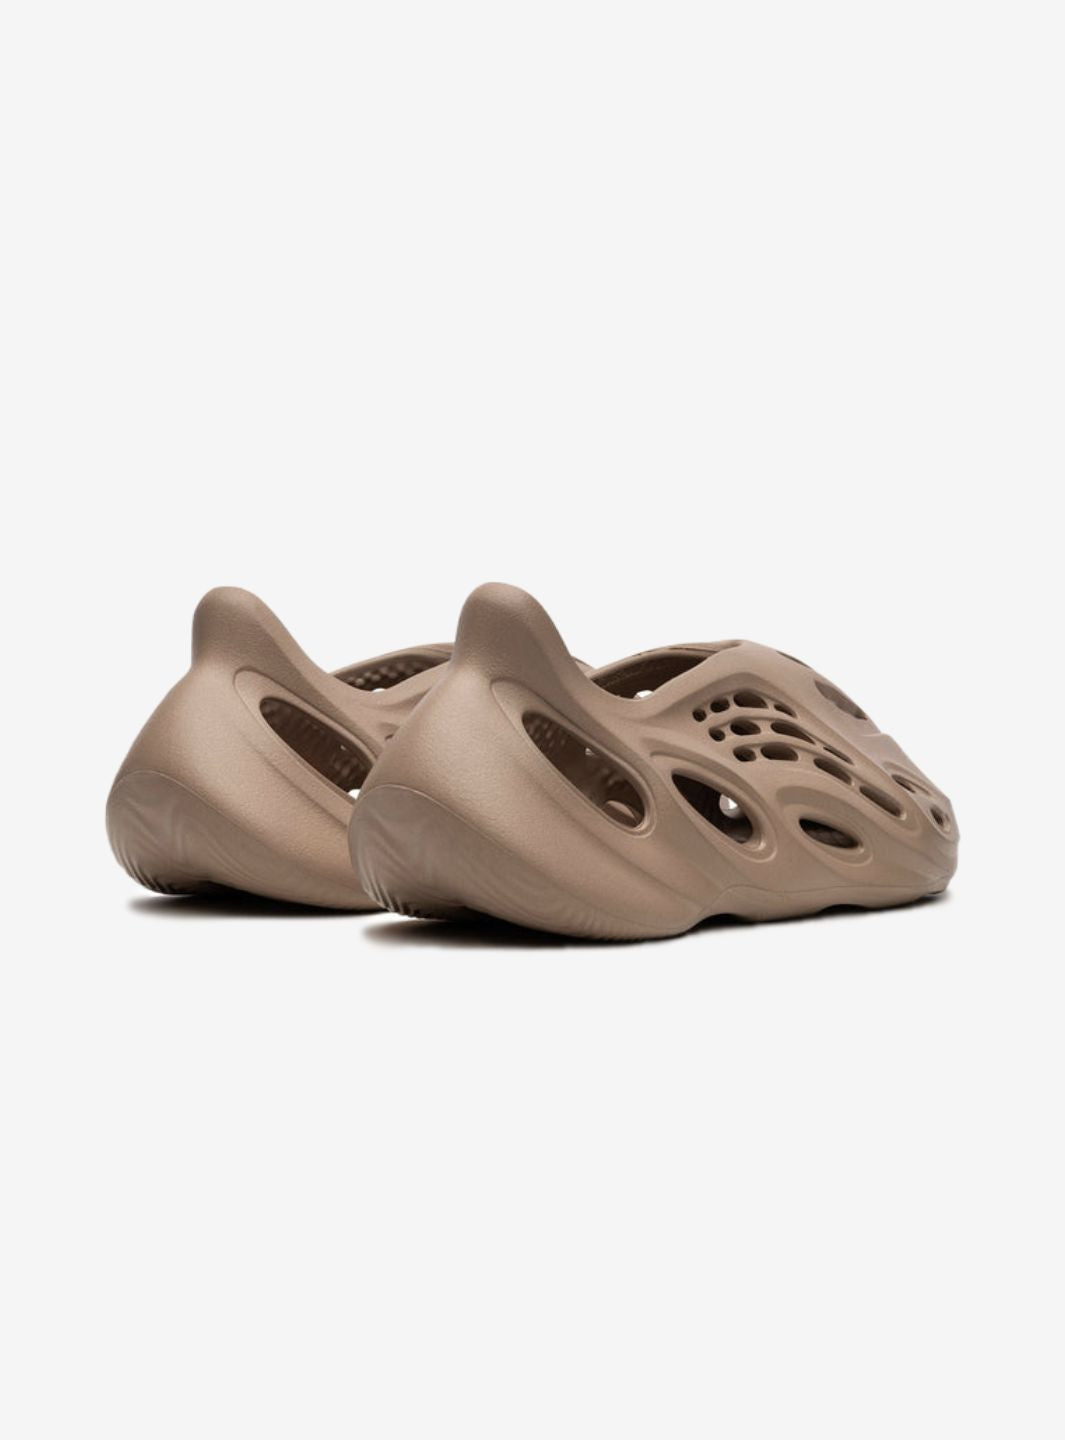 Adidas Yeezy Foam RNNR Clay Taupe - GV6842 | ResellZone